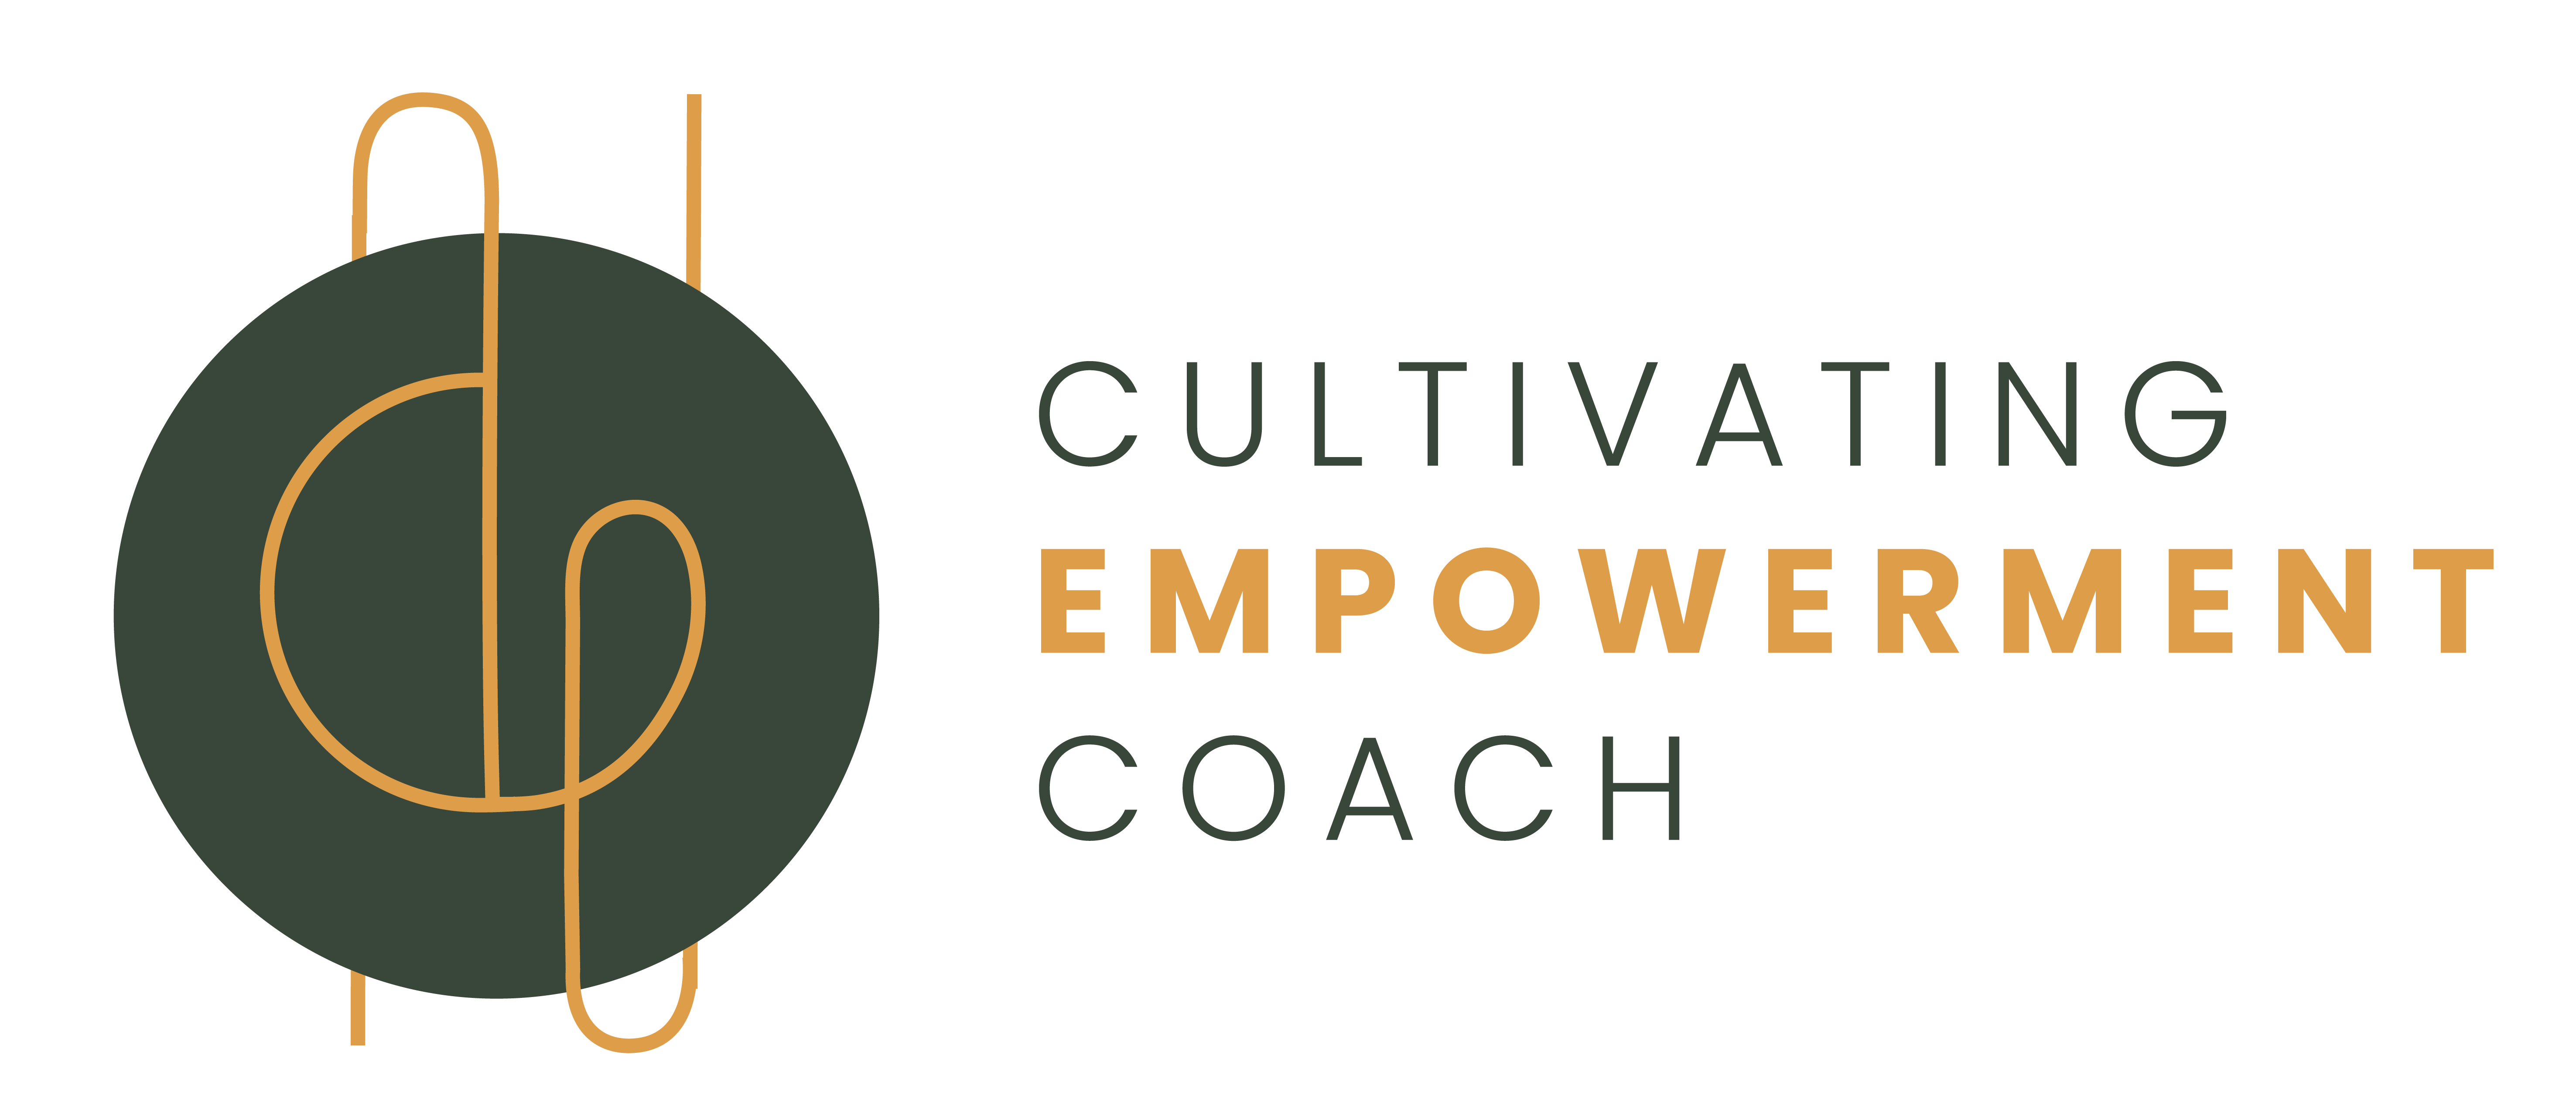 Cultivating empowerment coach logo